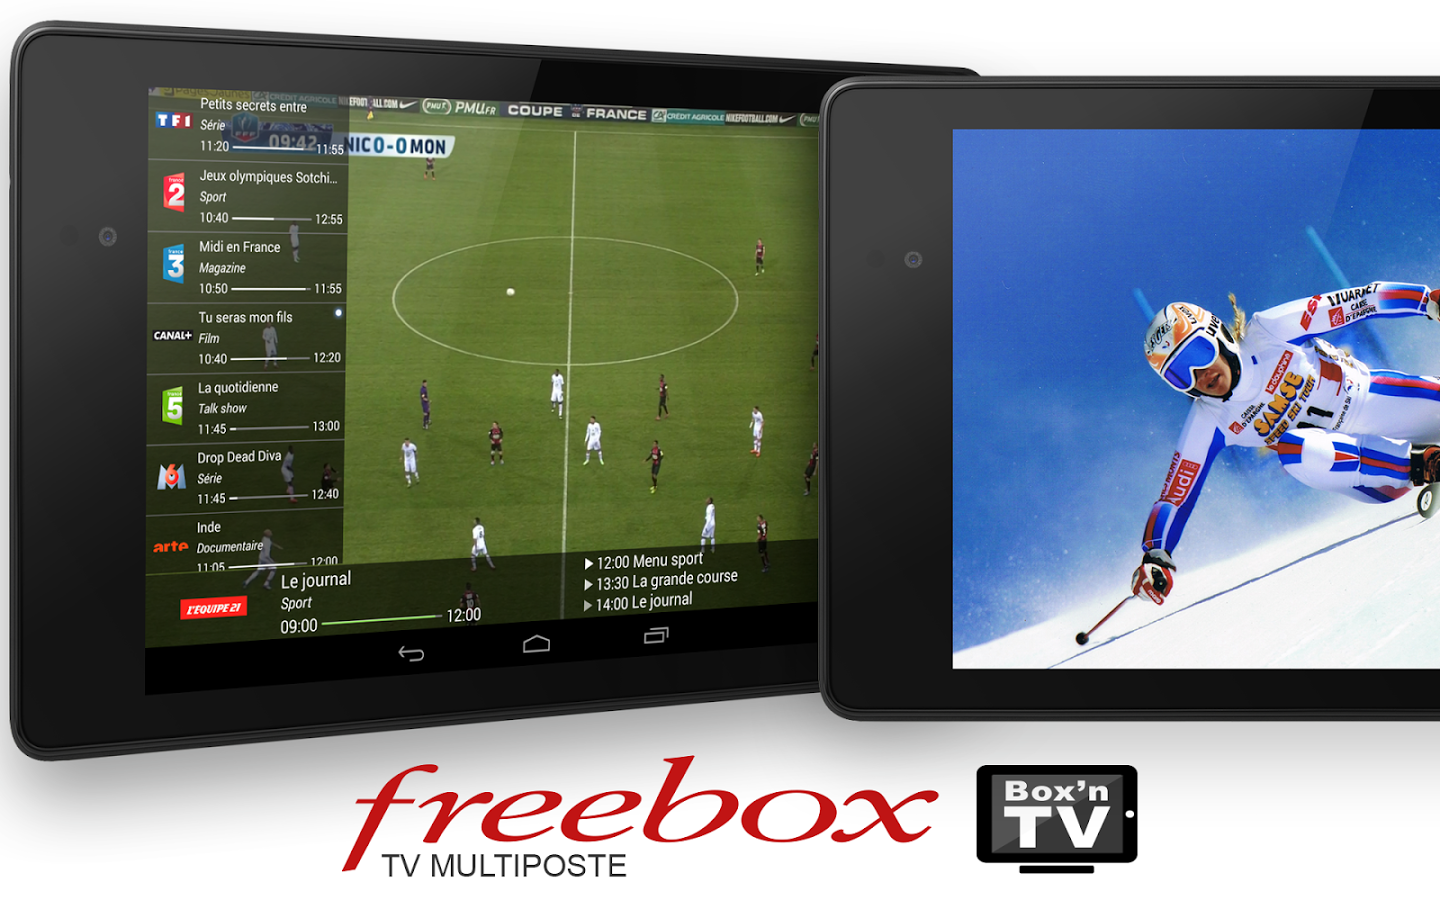 Box'n TV-Freebox Multiposte